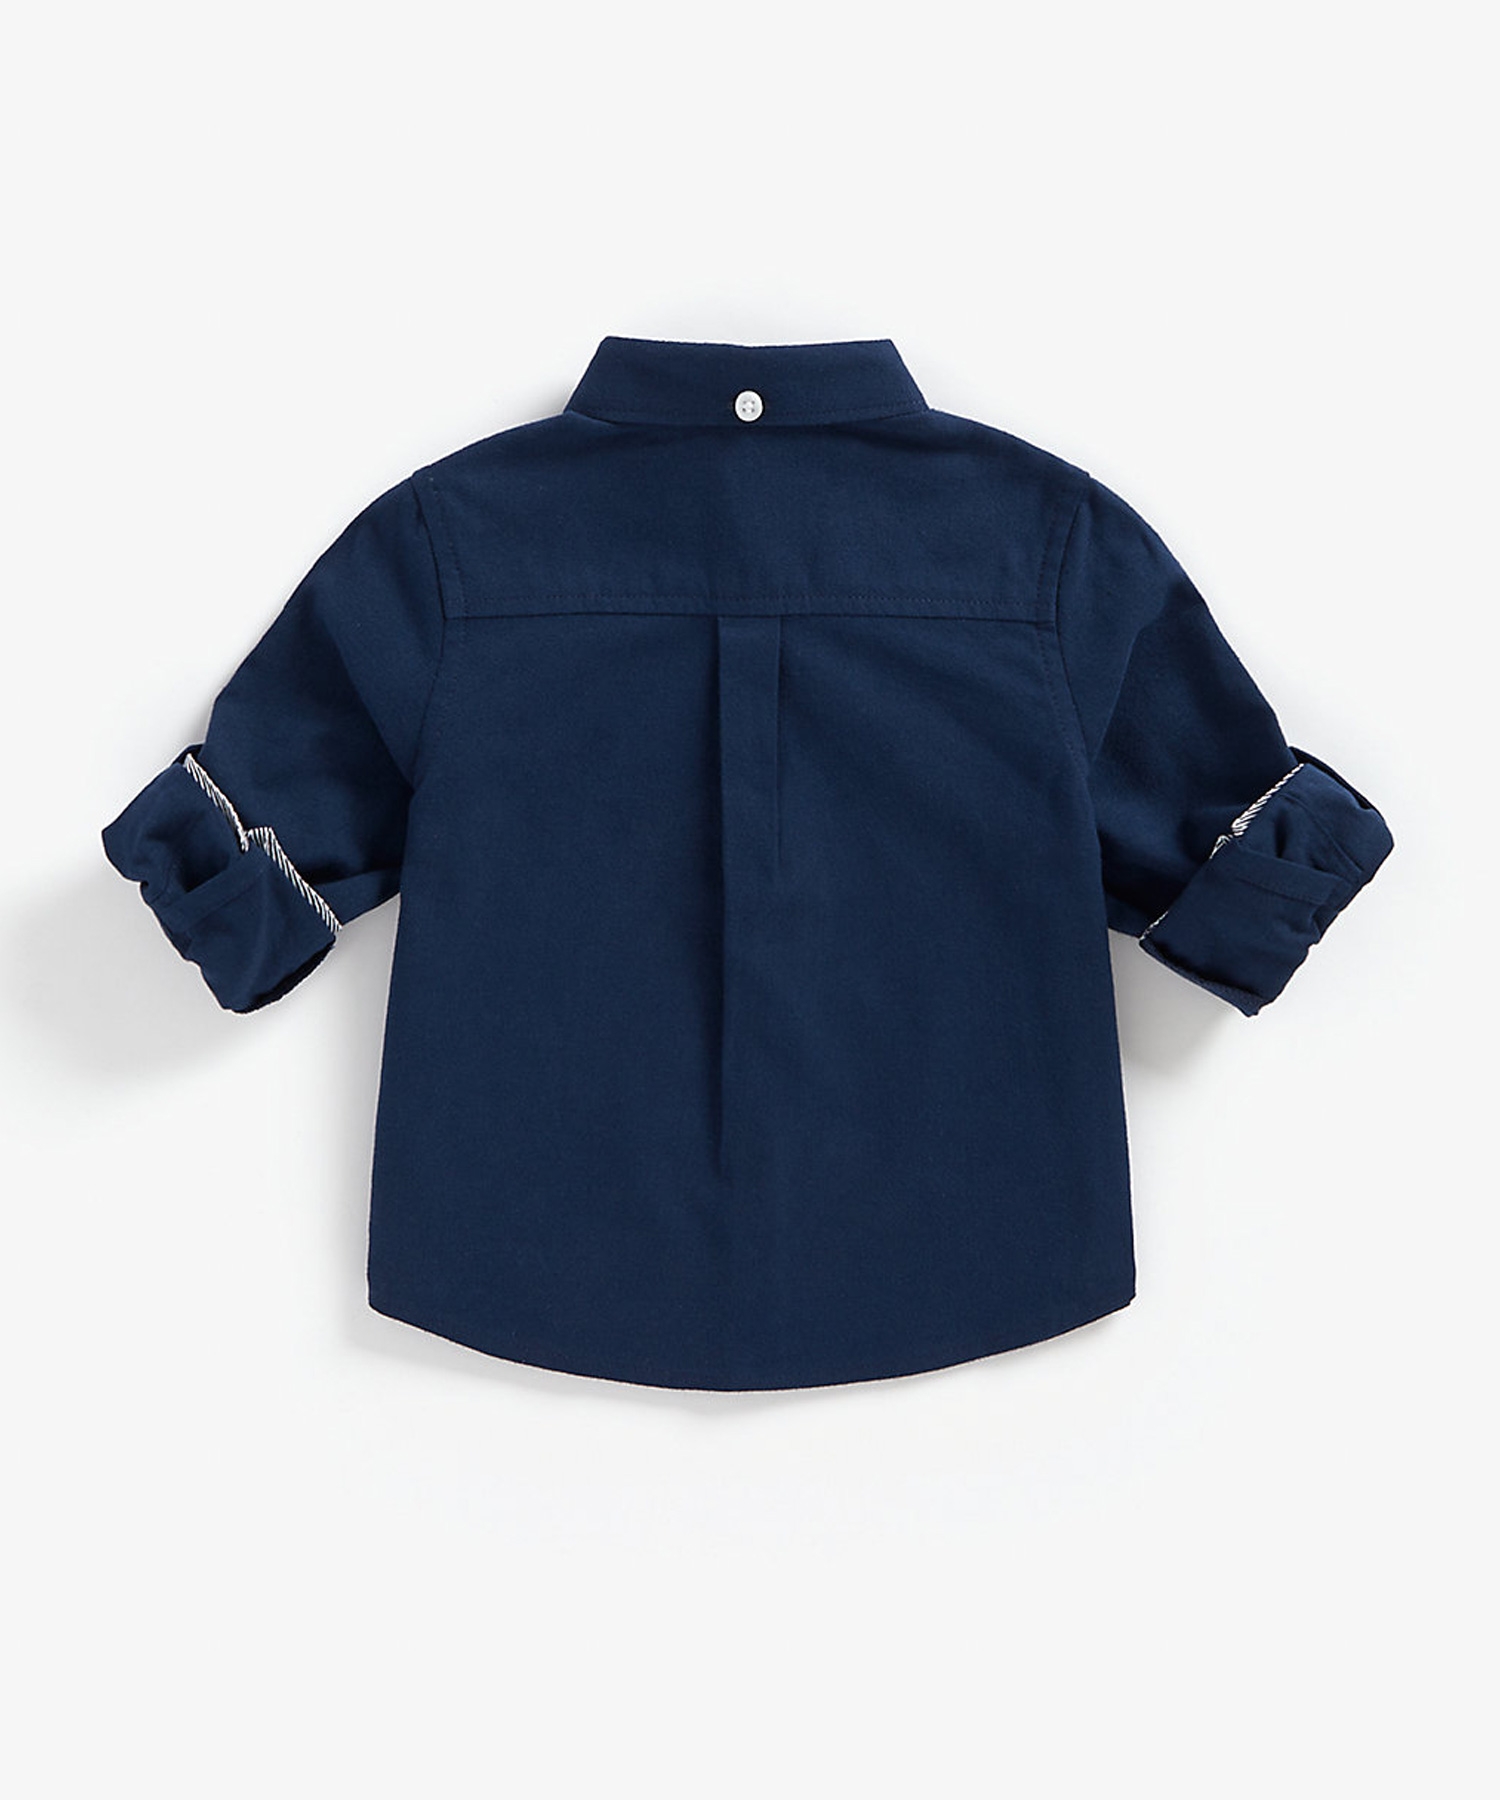 Boys Full Sleeves Oxford Shirt  - Navy